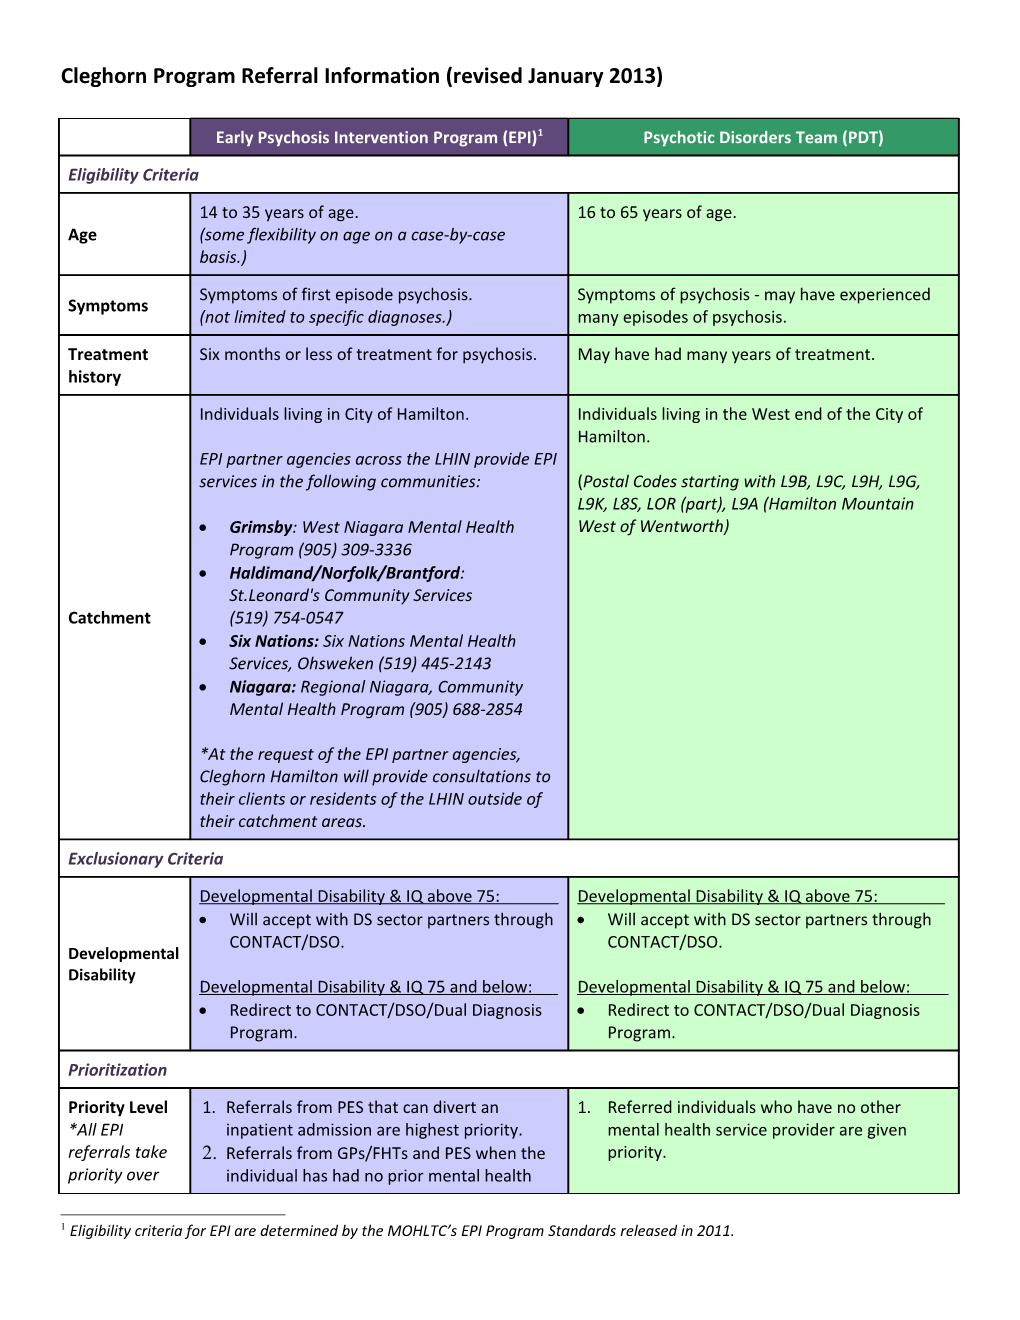 Cleghorn Program Referral Information (Revised January 2013)